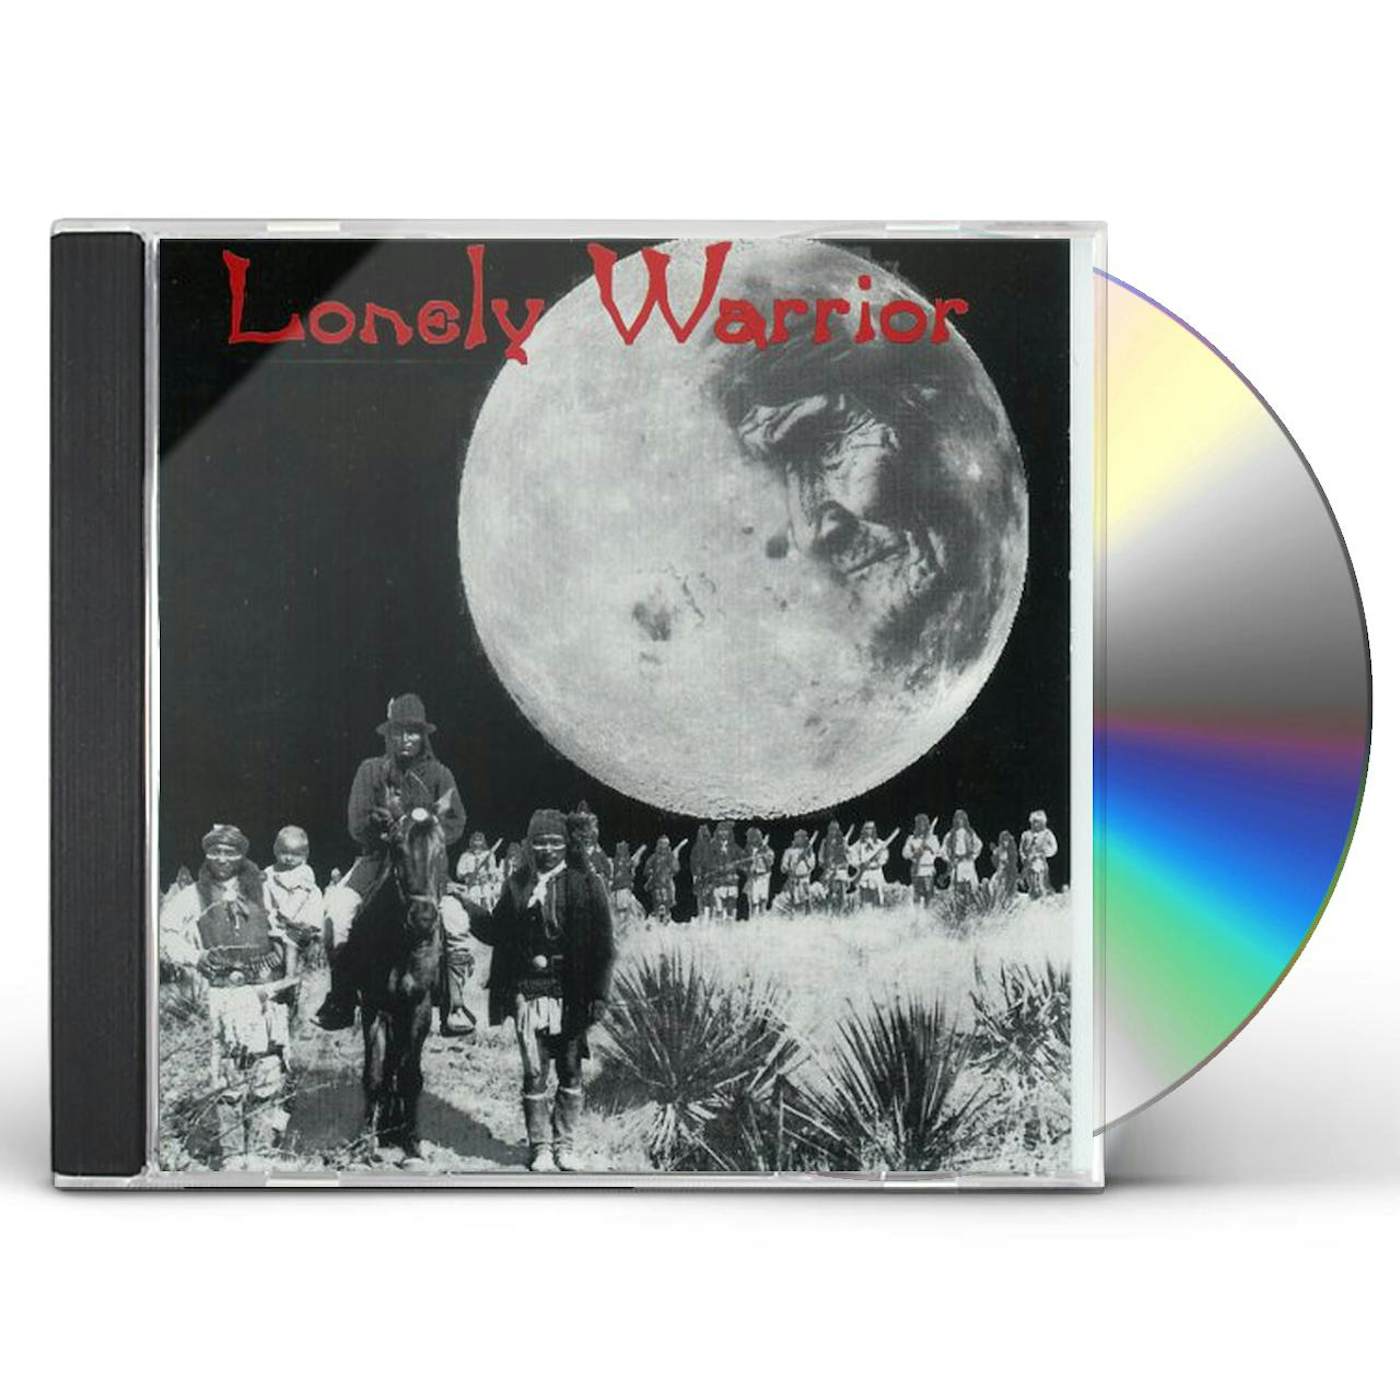 Yolanda Martinez LONELY WARRIOR CD